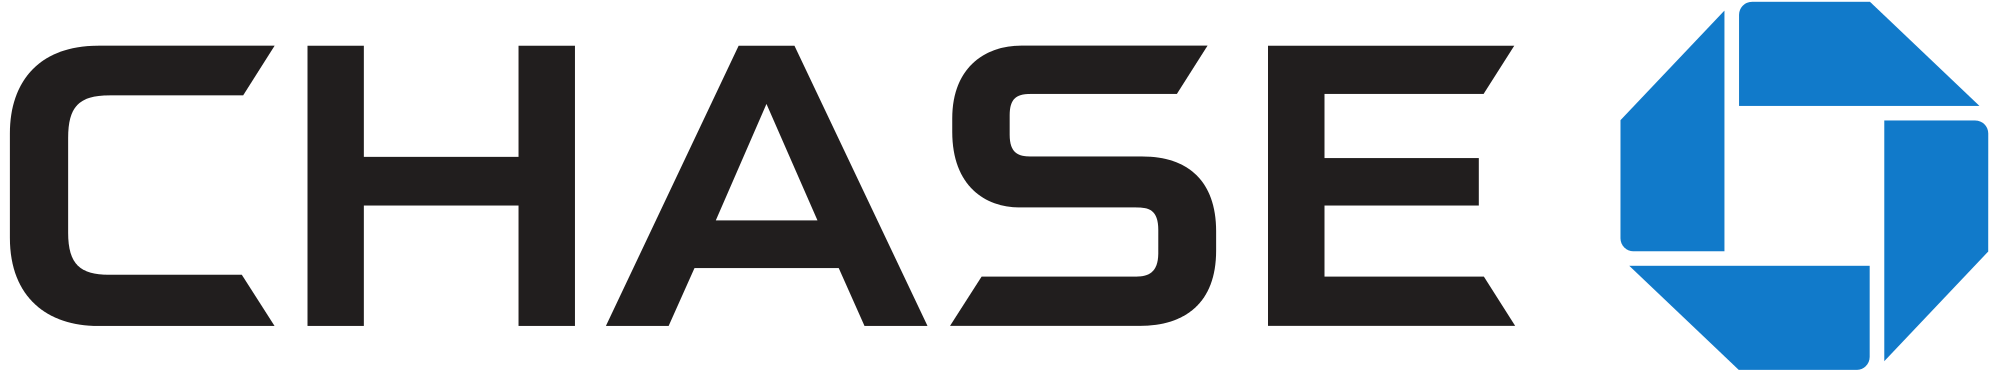 Chase Bank Logo PNG Image